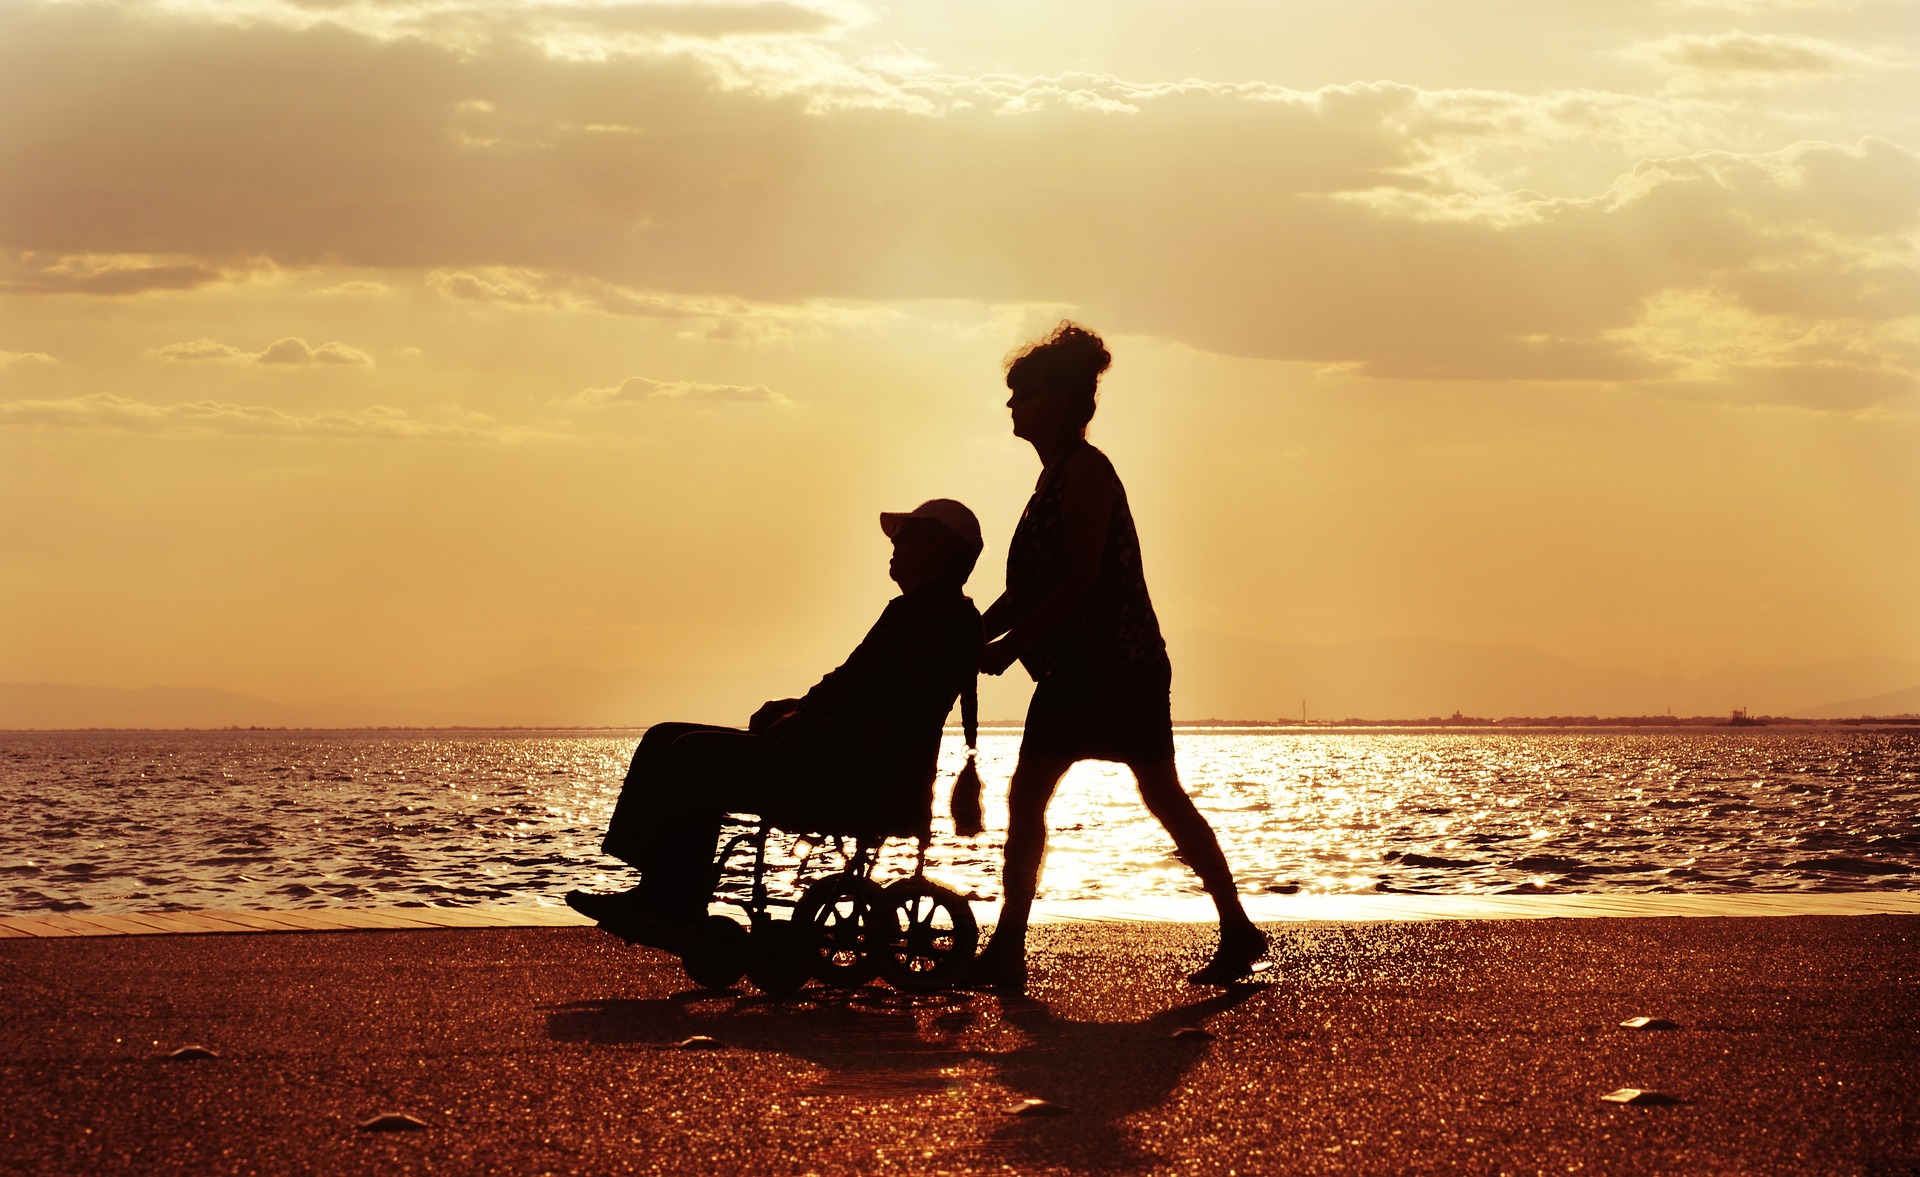 Wheelchair traveler on a beach